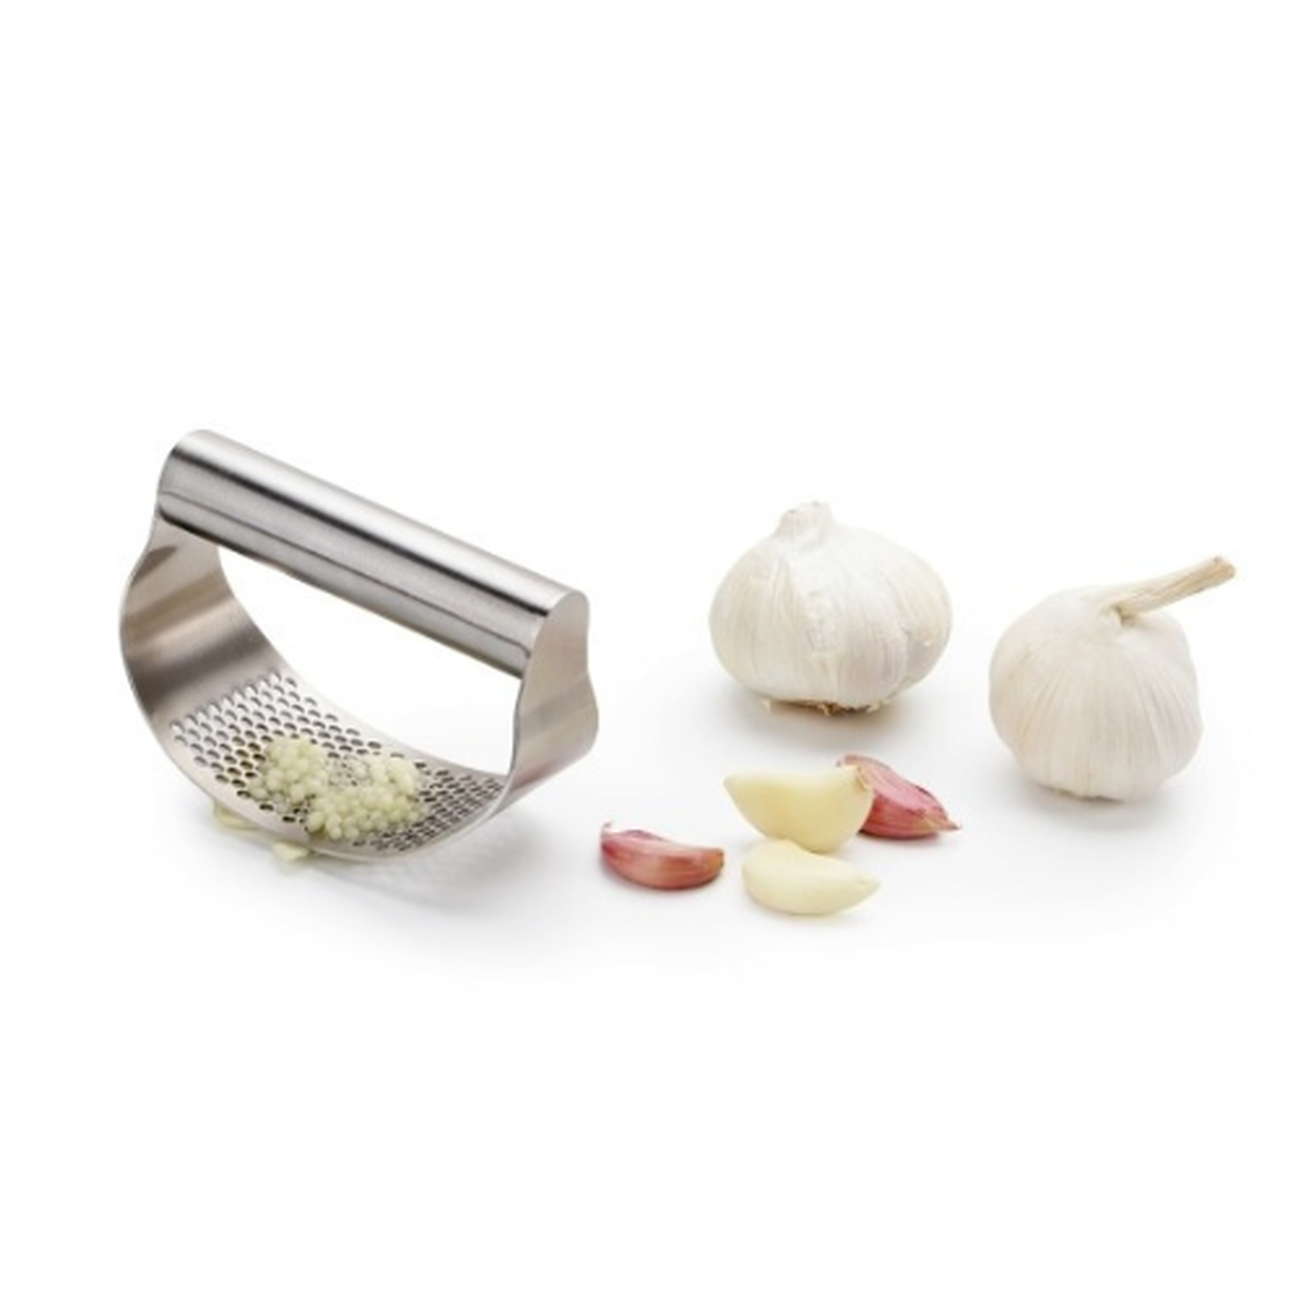 weis-ss-garlic-press - Weis Stainless Steel Garlic Press